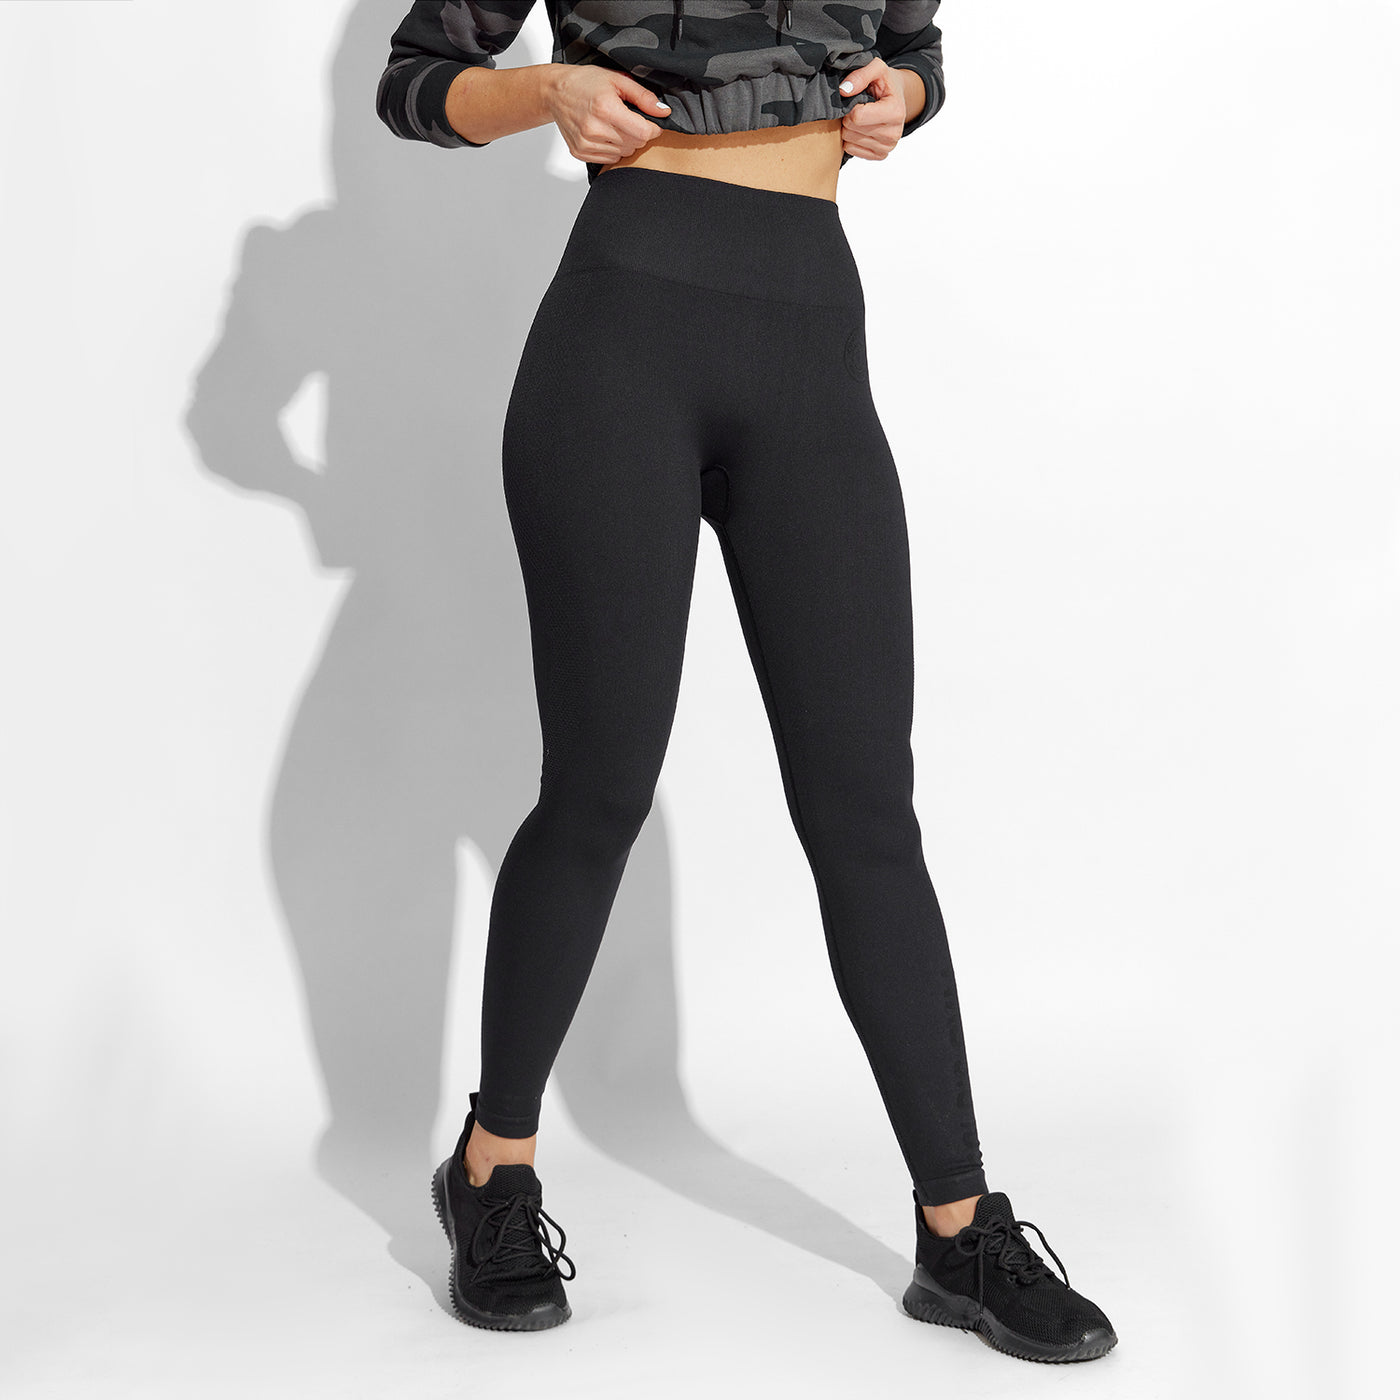 photo of female model wearing train seamless legging in black.